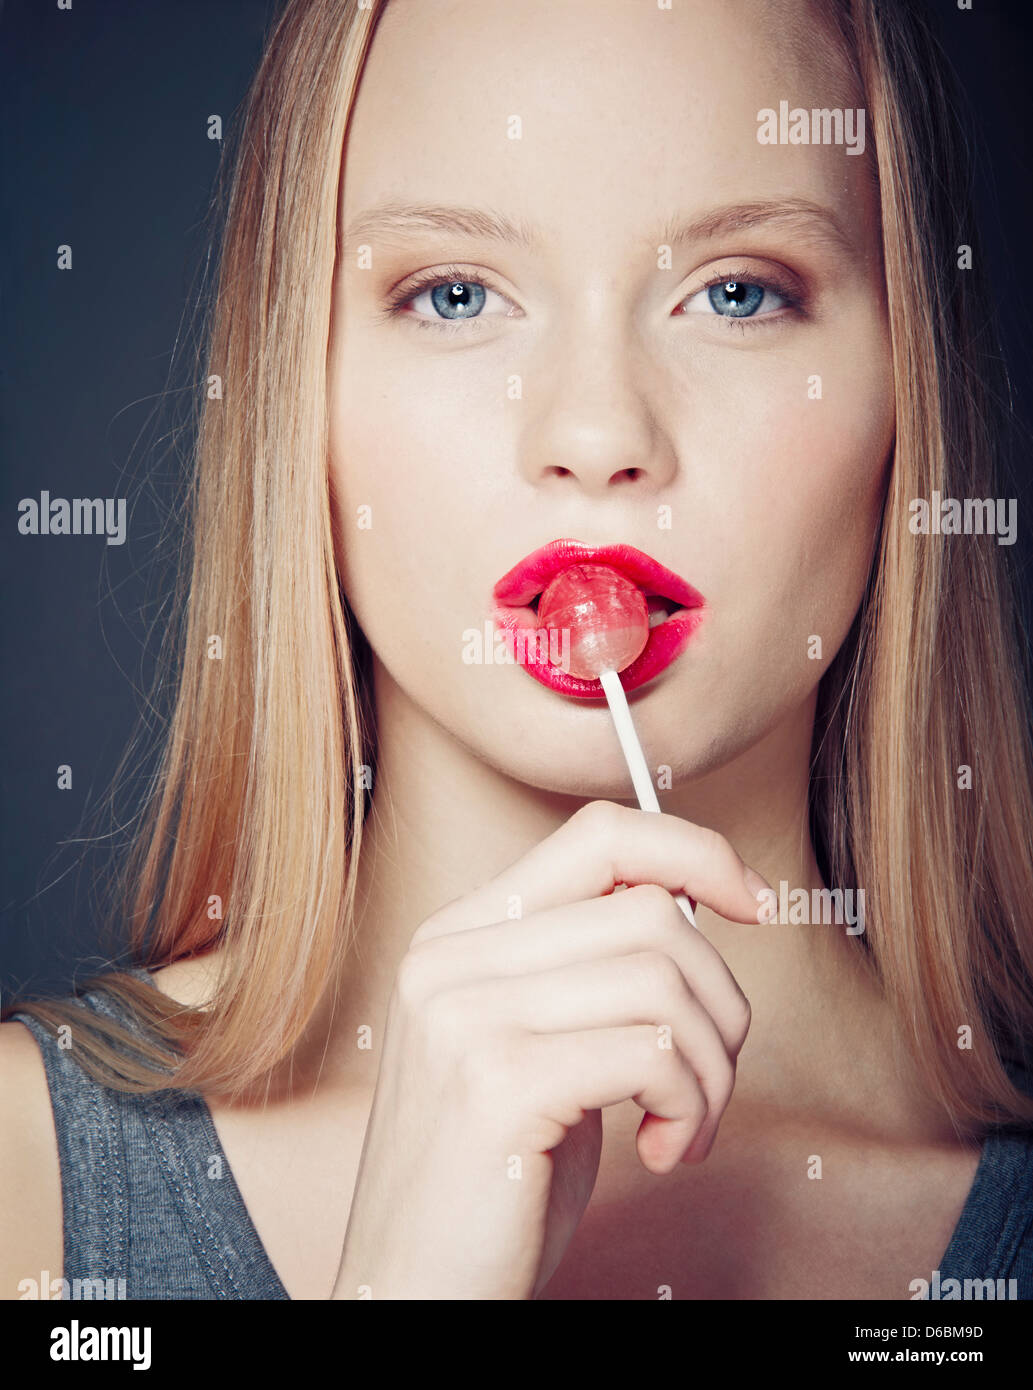 Smiling woman eating lollipop Stock Photo